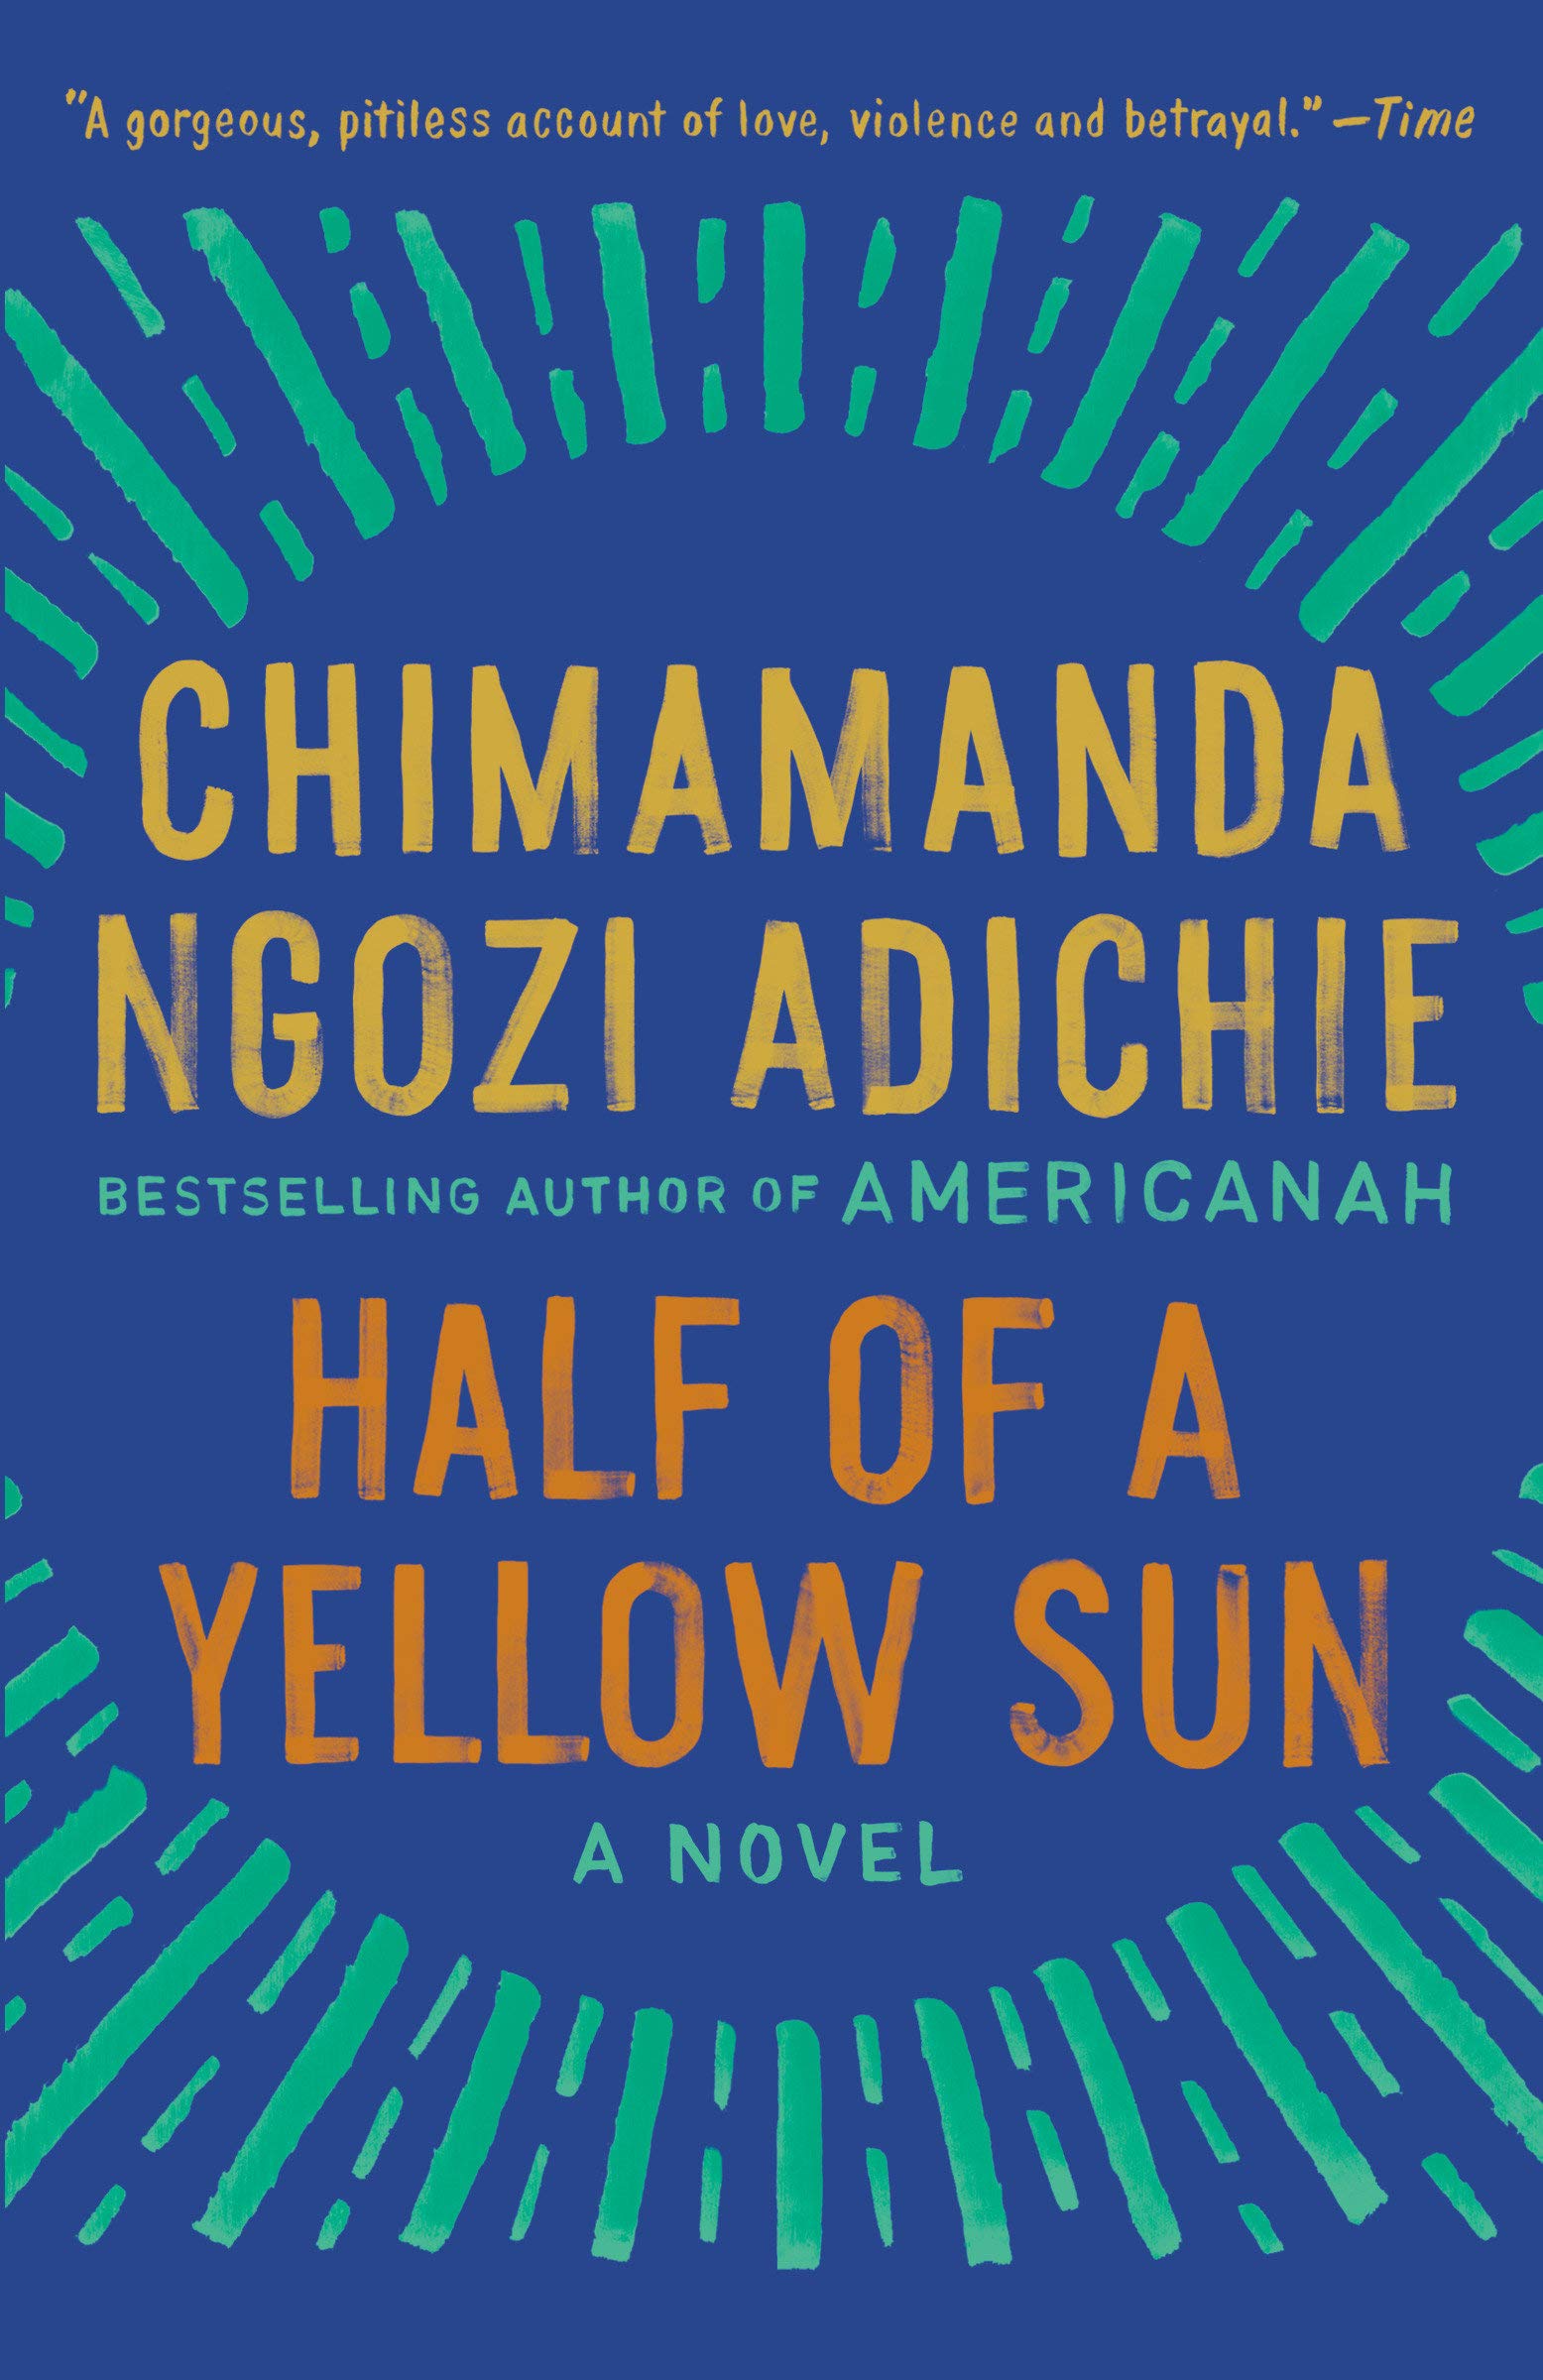 Chimamanda Ngozi Adiche’s ‘Half of a Yellow Sun’